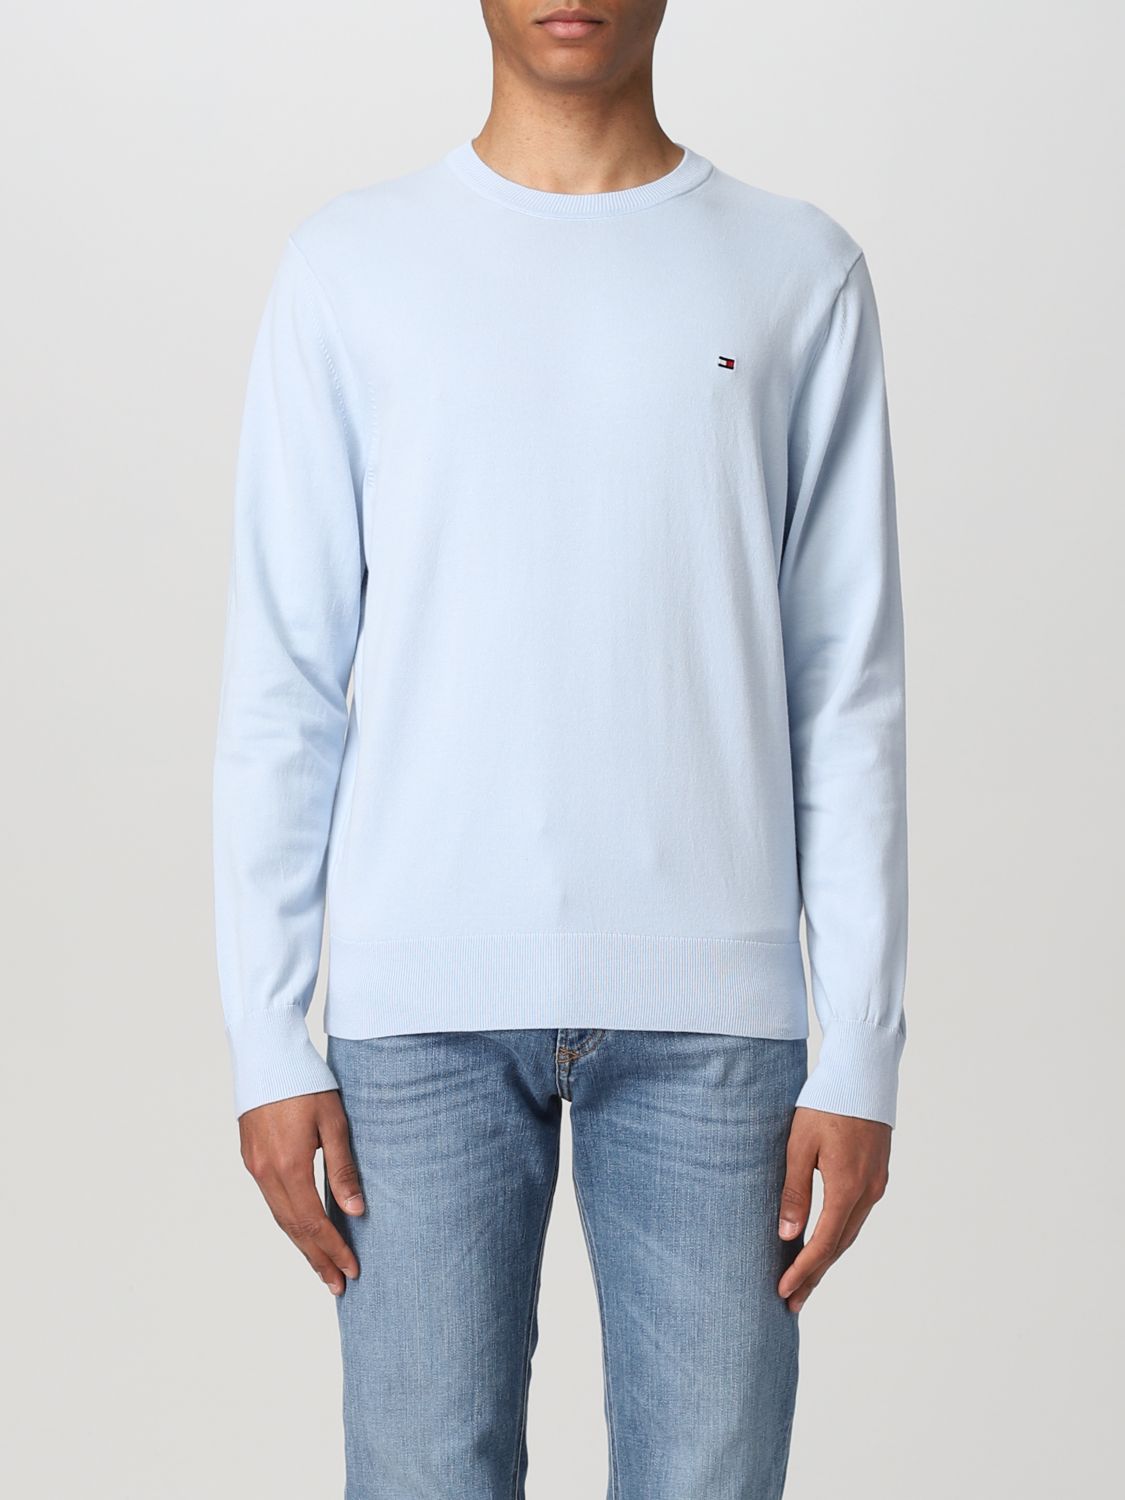 Tommy Hilfiger cotton sweater - Blue 1 | Tommy Hilfiger sweater MW0MW21316 online on GIGLIO.COM